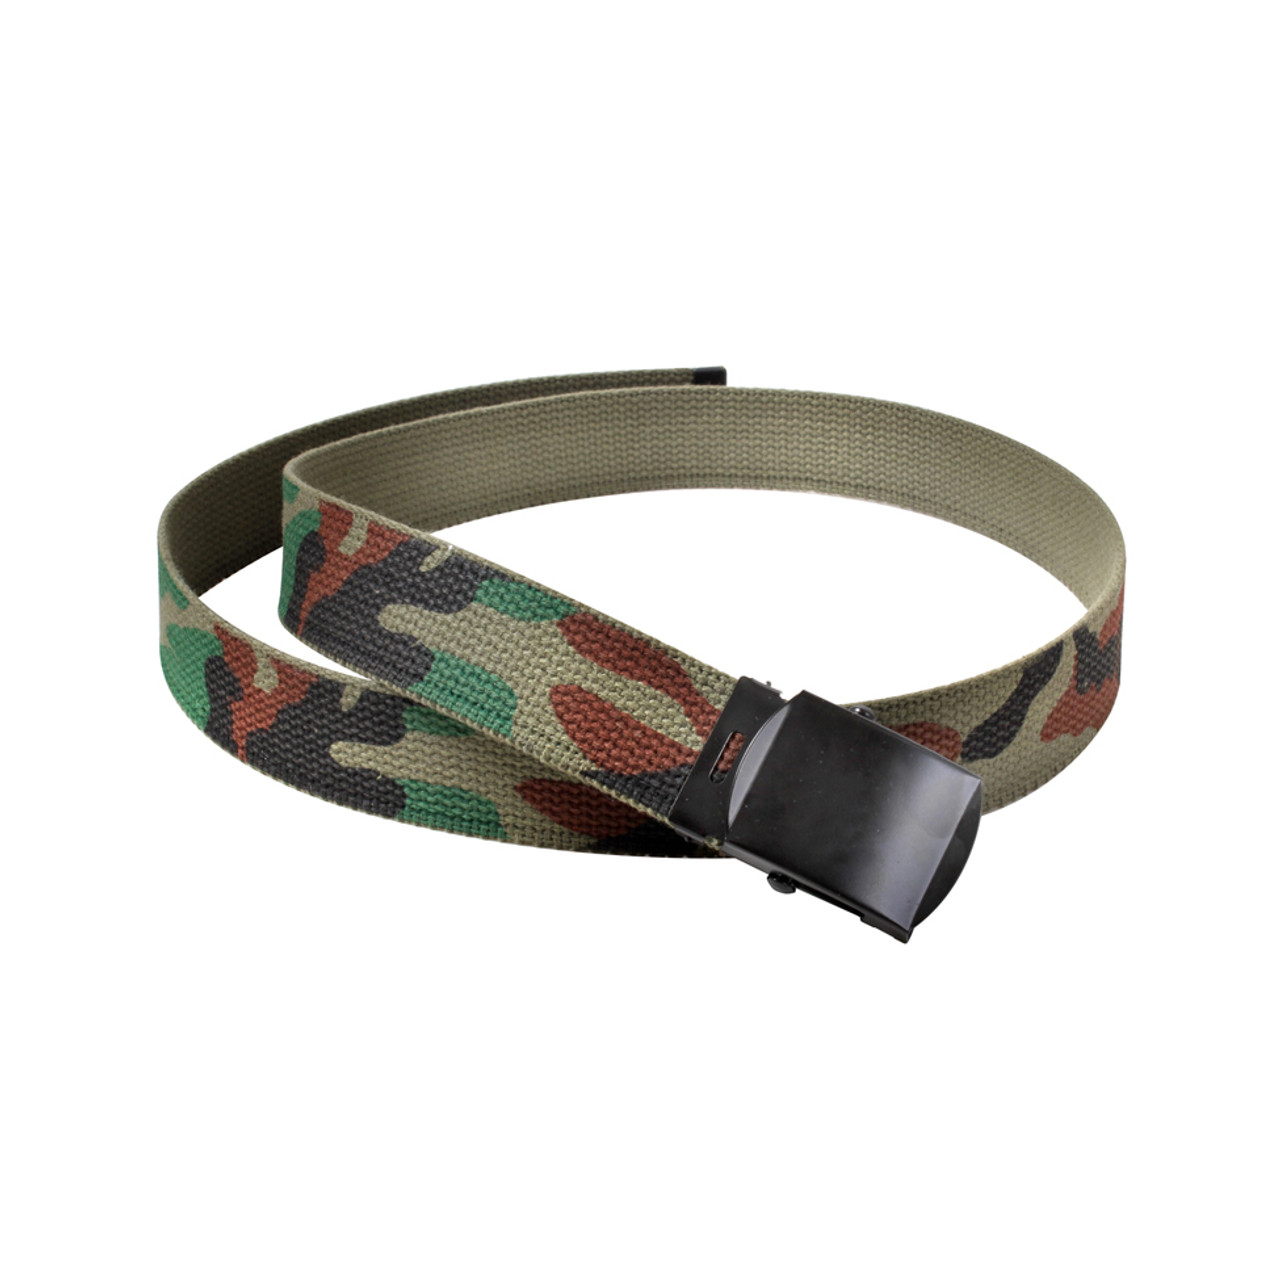 Shop Kids Army Camo Web Belt - Fatigues Army Navy Gear